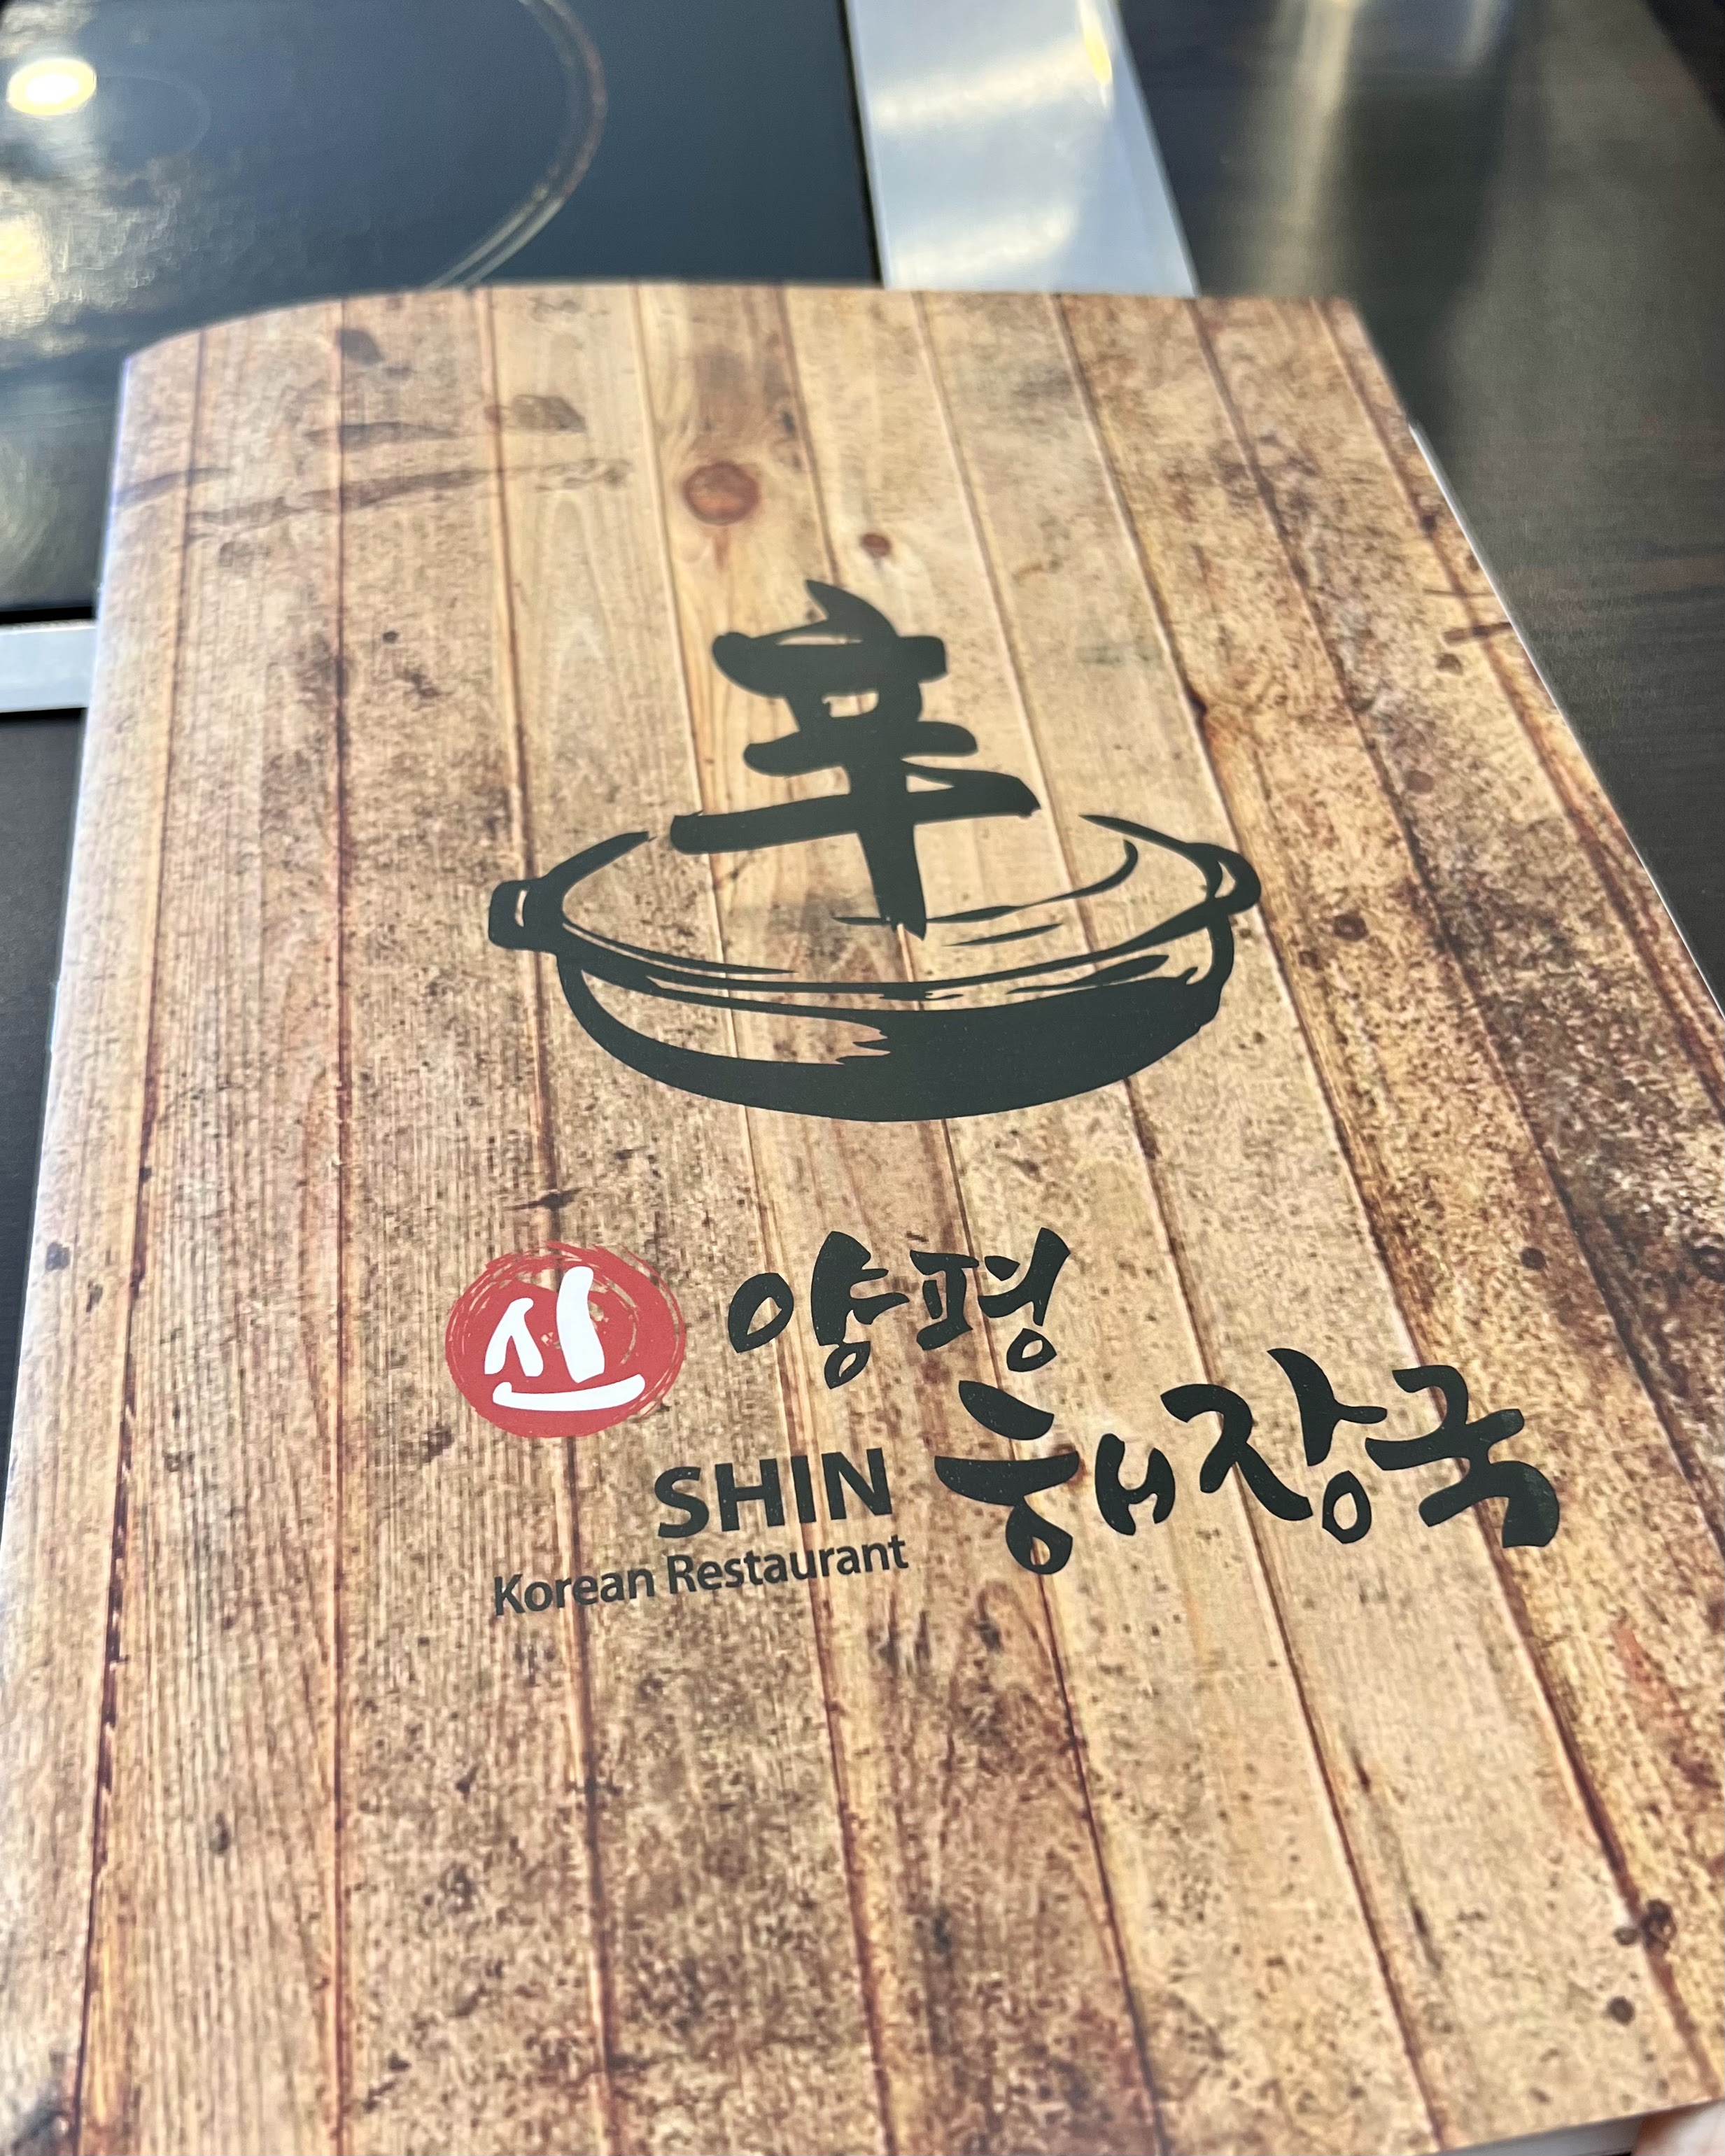 Shin Korean Restaurant menu